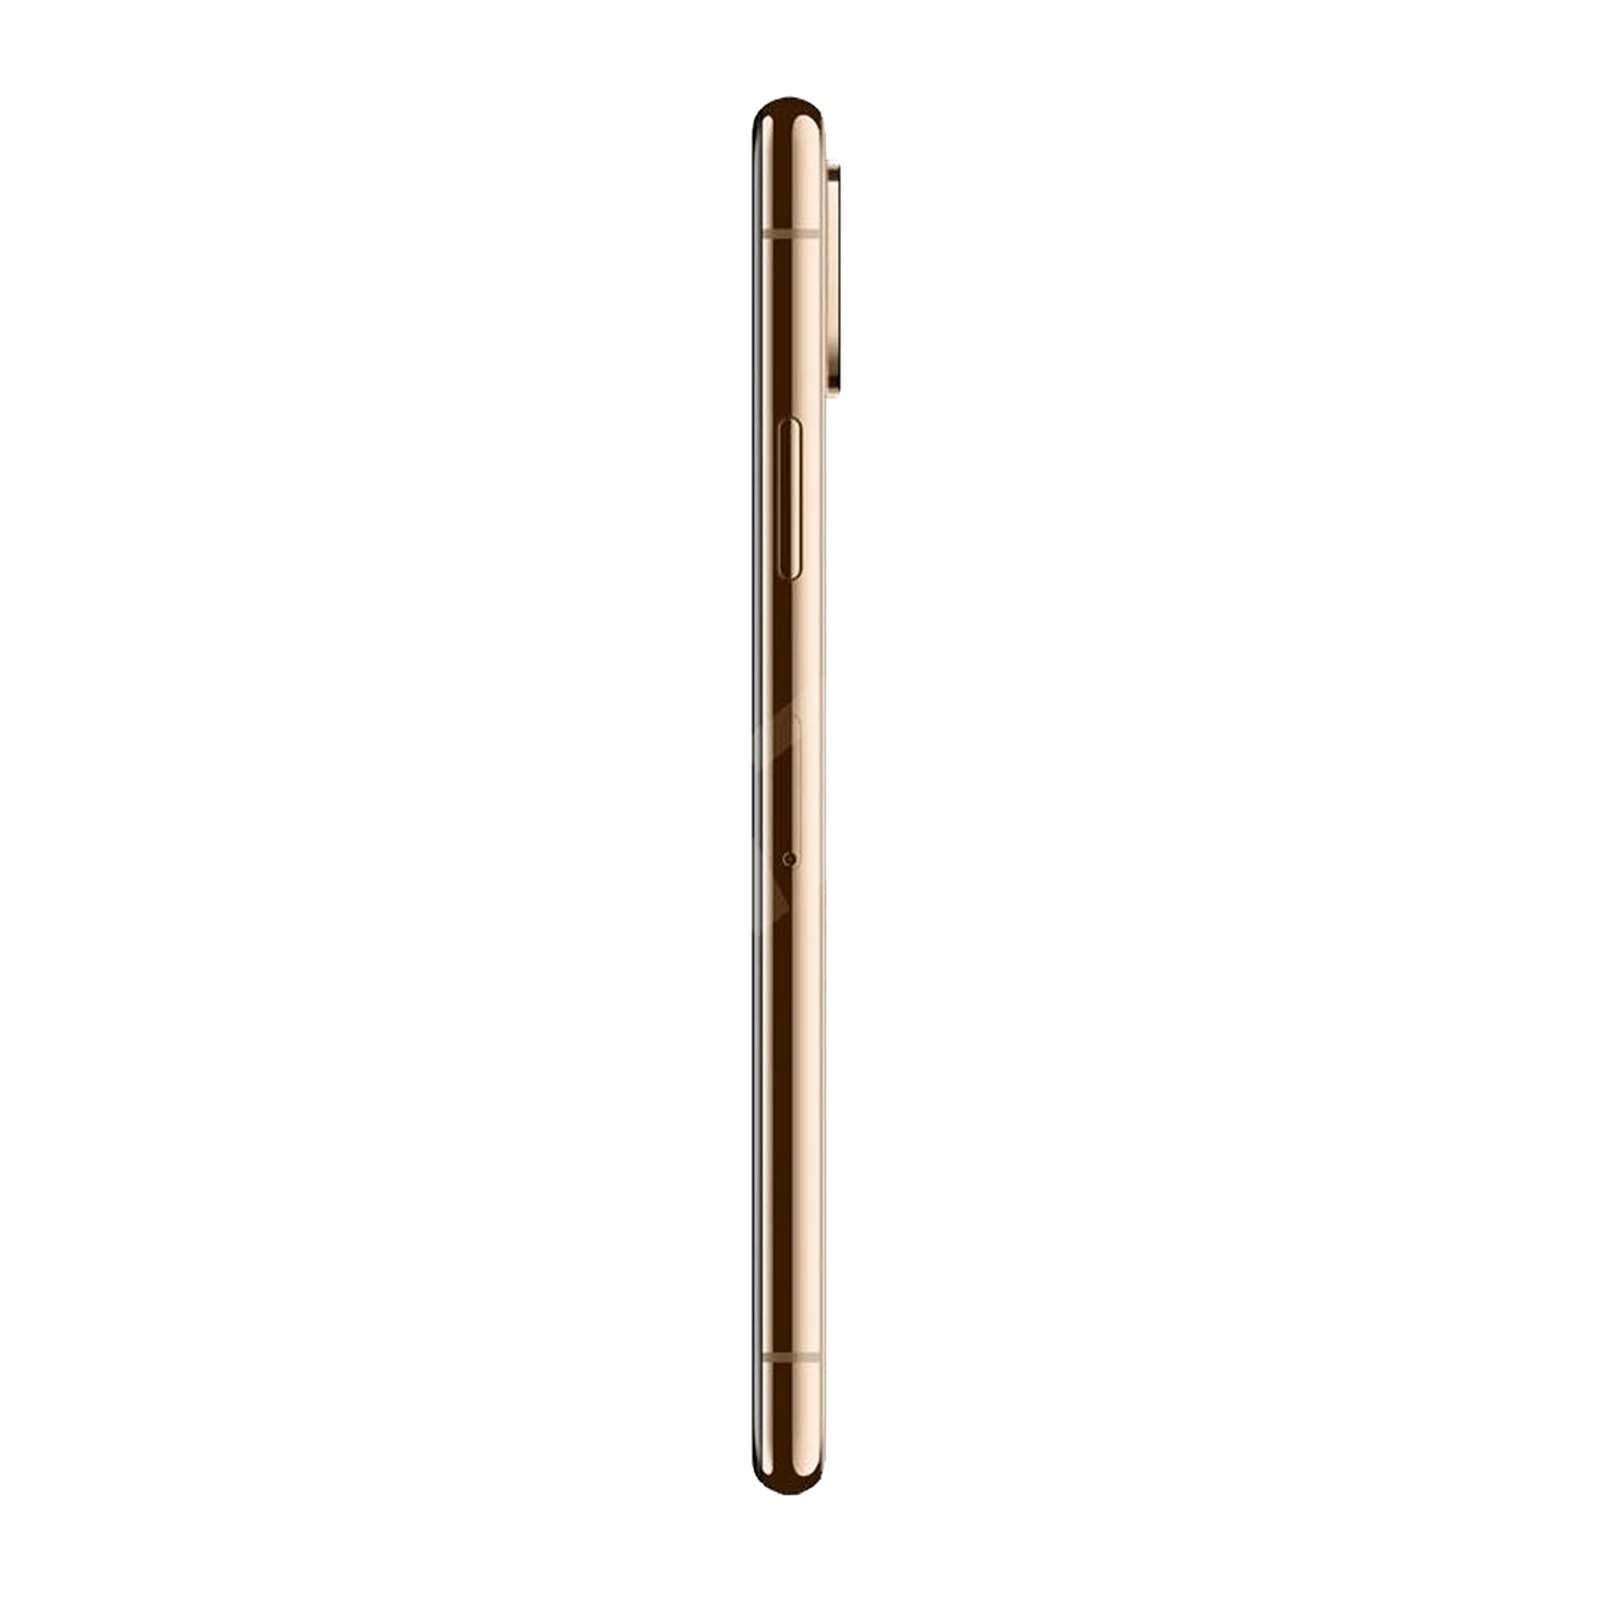 Apple iPhone XS Max 512GB Gold Fair - Unlocked